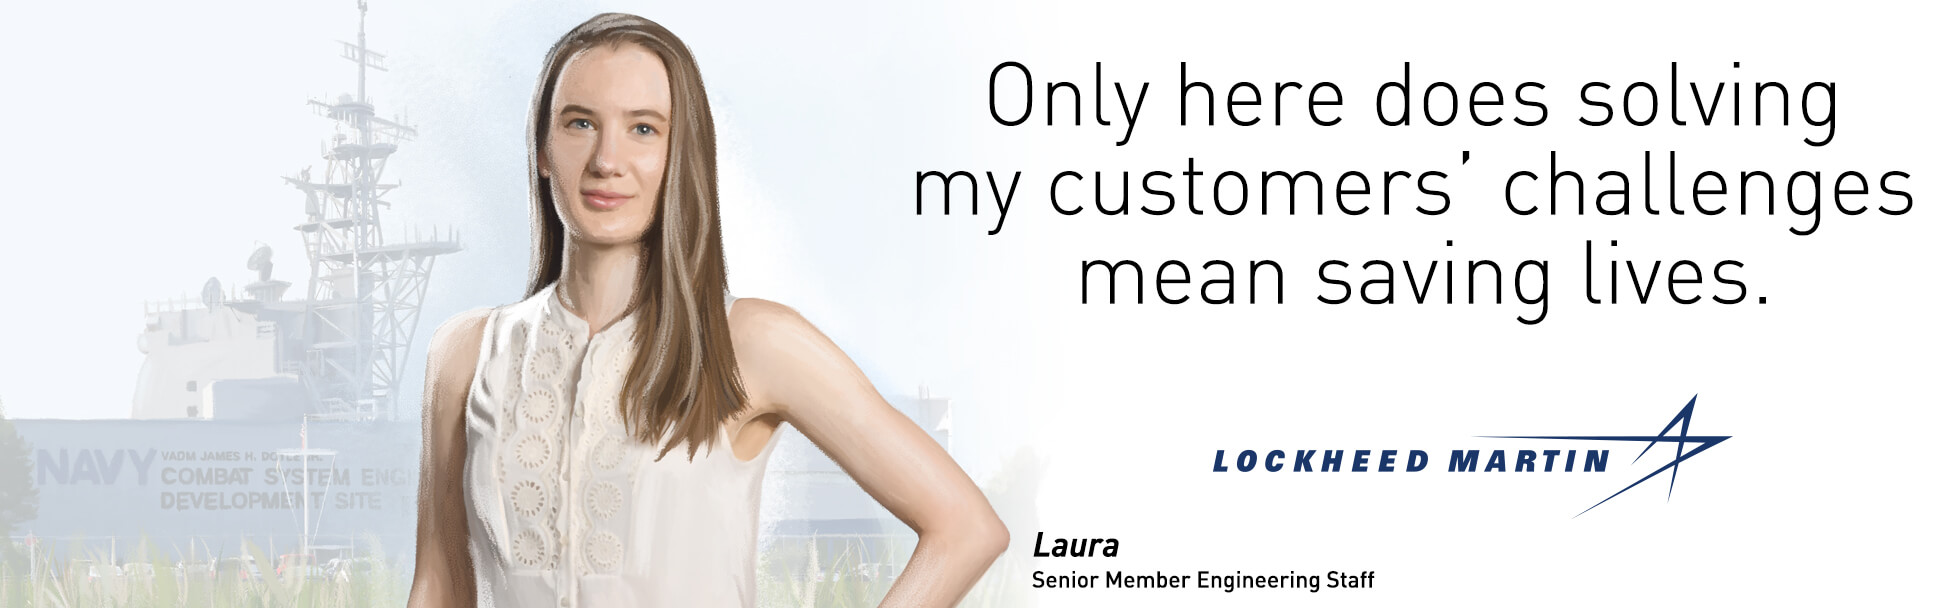 Laura - Senior Member Engineering Staff